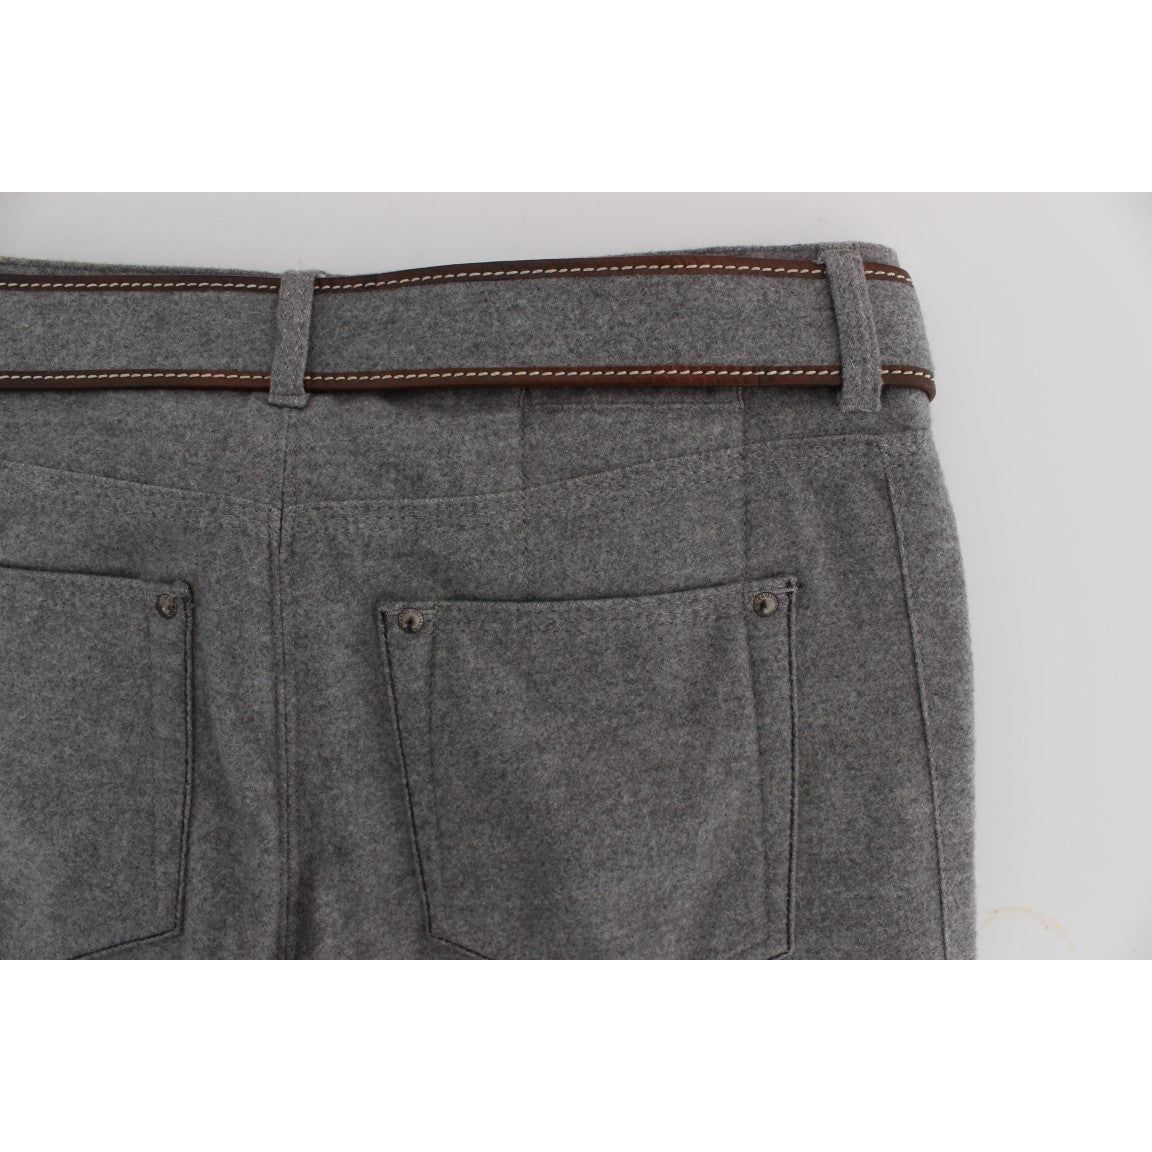 Ermanno Scervino Chic Gray Casual Cotton Pants gray-cotton-slim-fit-casual-bootcut-pants 330385-gray-cotton-slim-fit-casual-bootcut-pants-7.jpg